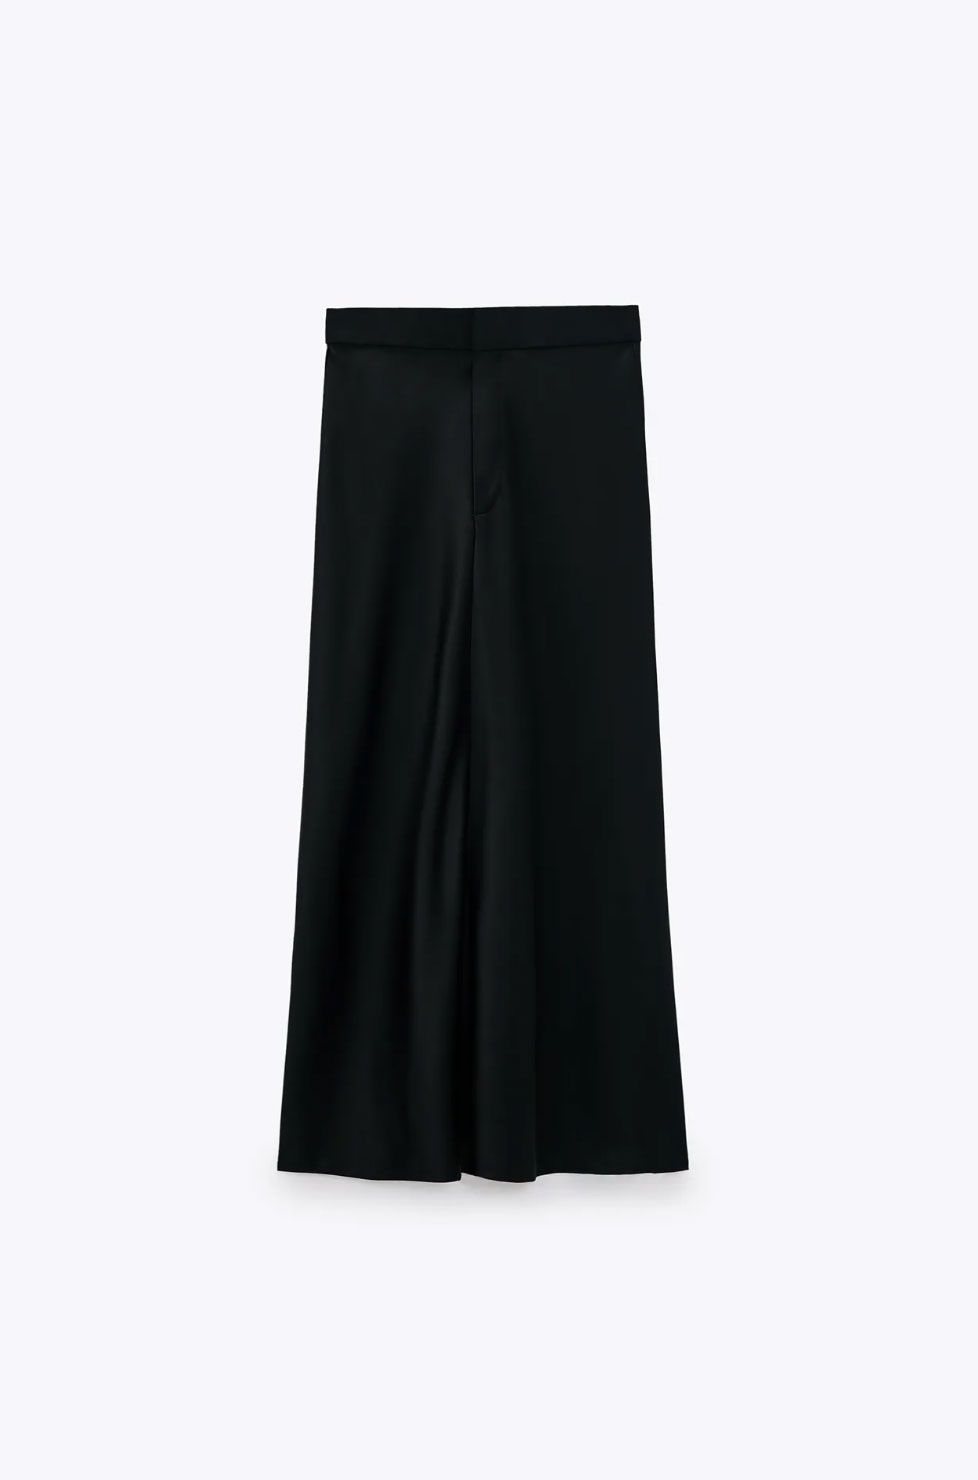 Las 3 faldas midi negras serán tendencia en verano